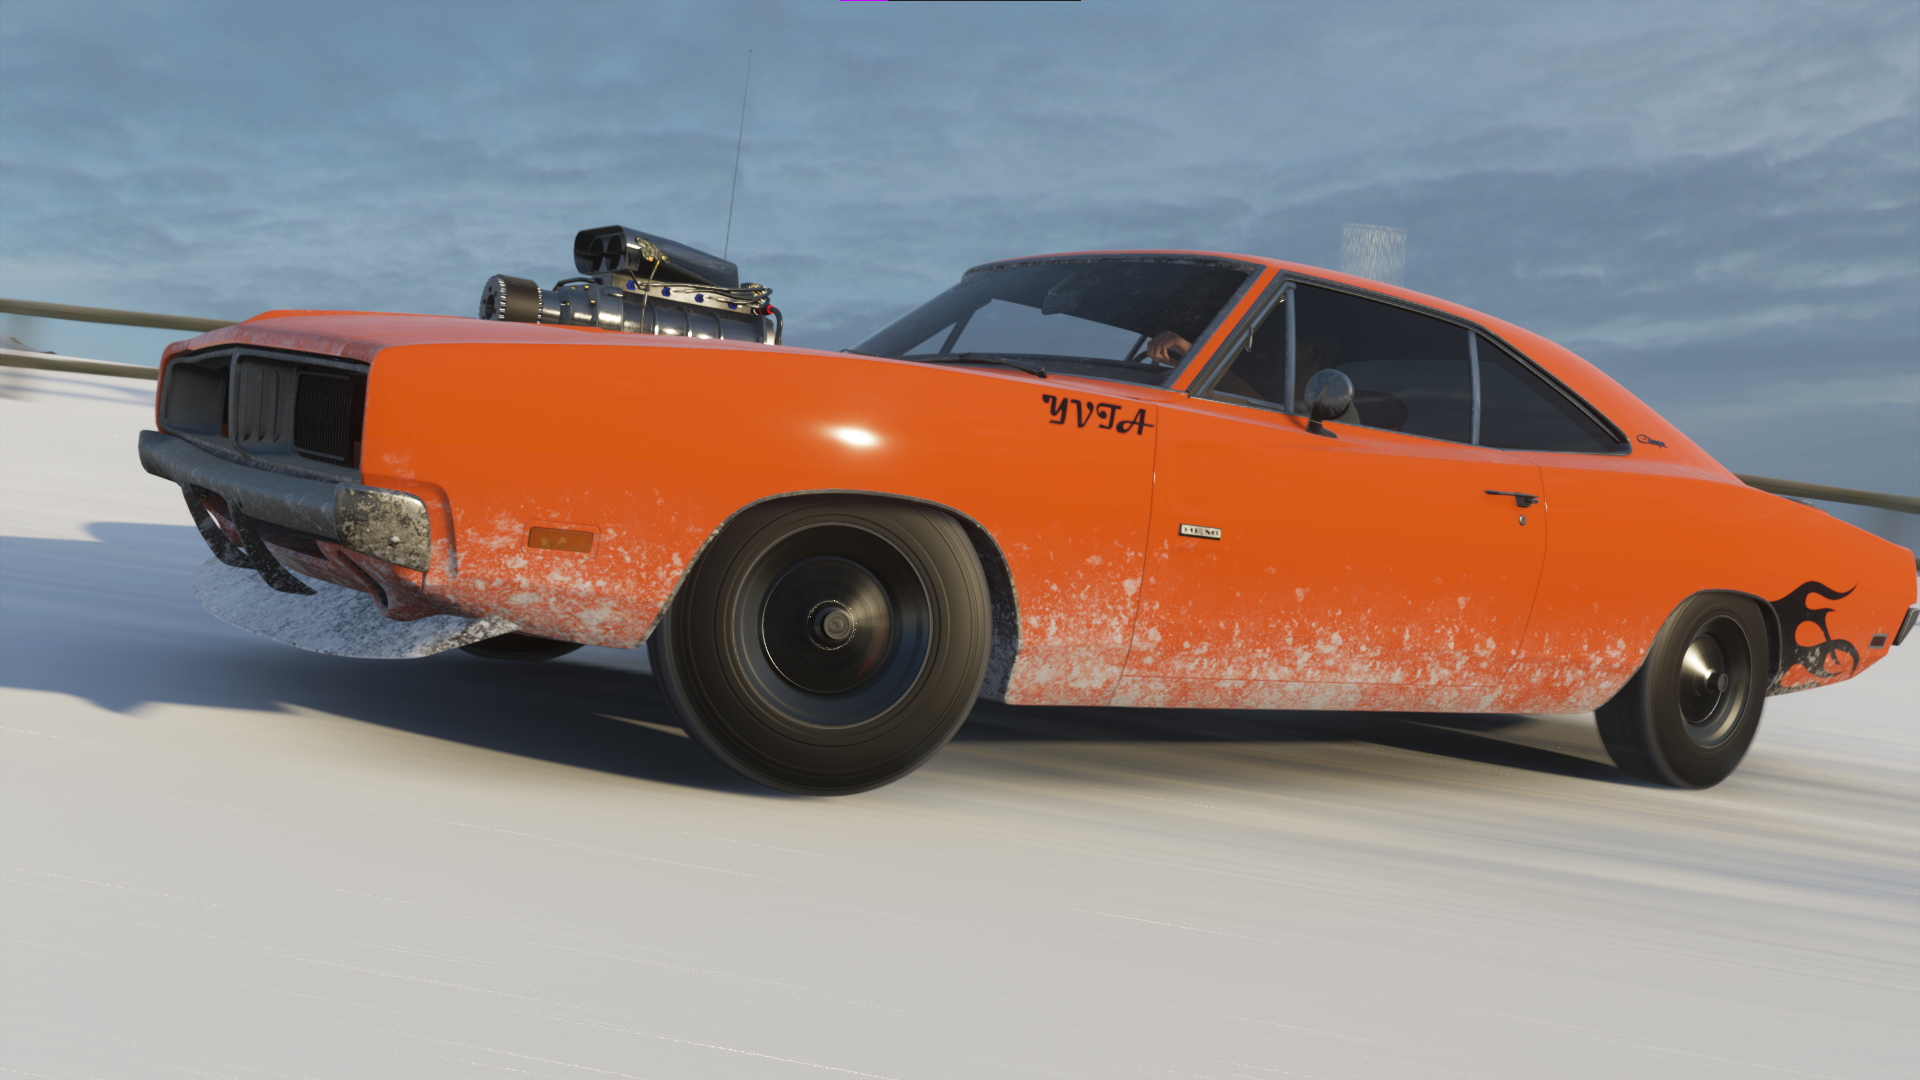 General 1920x1080 Forza Horizon Forza Horizon 4 Dodge Charger orange Hemi snow cold car video games